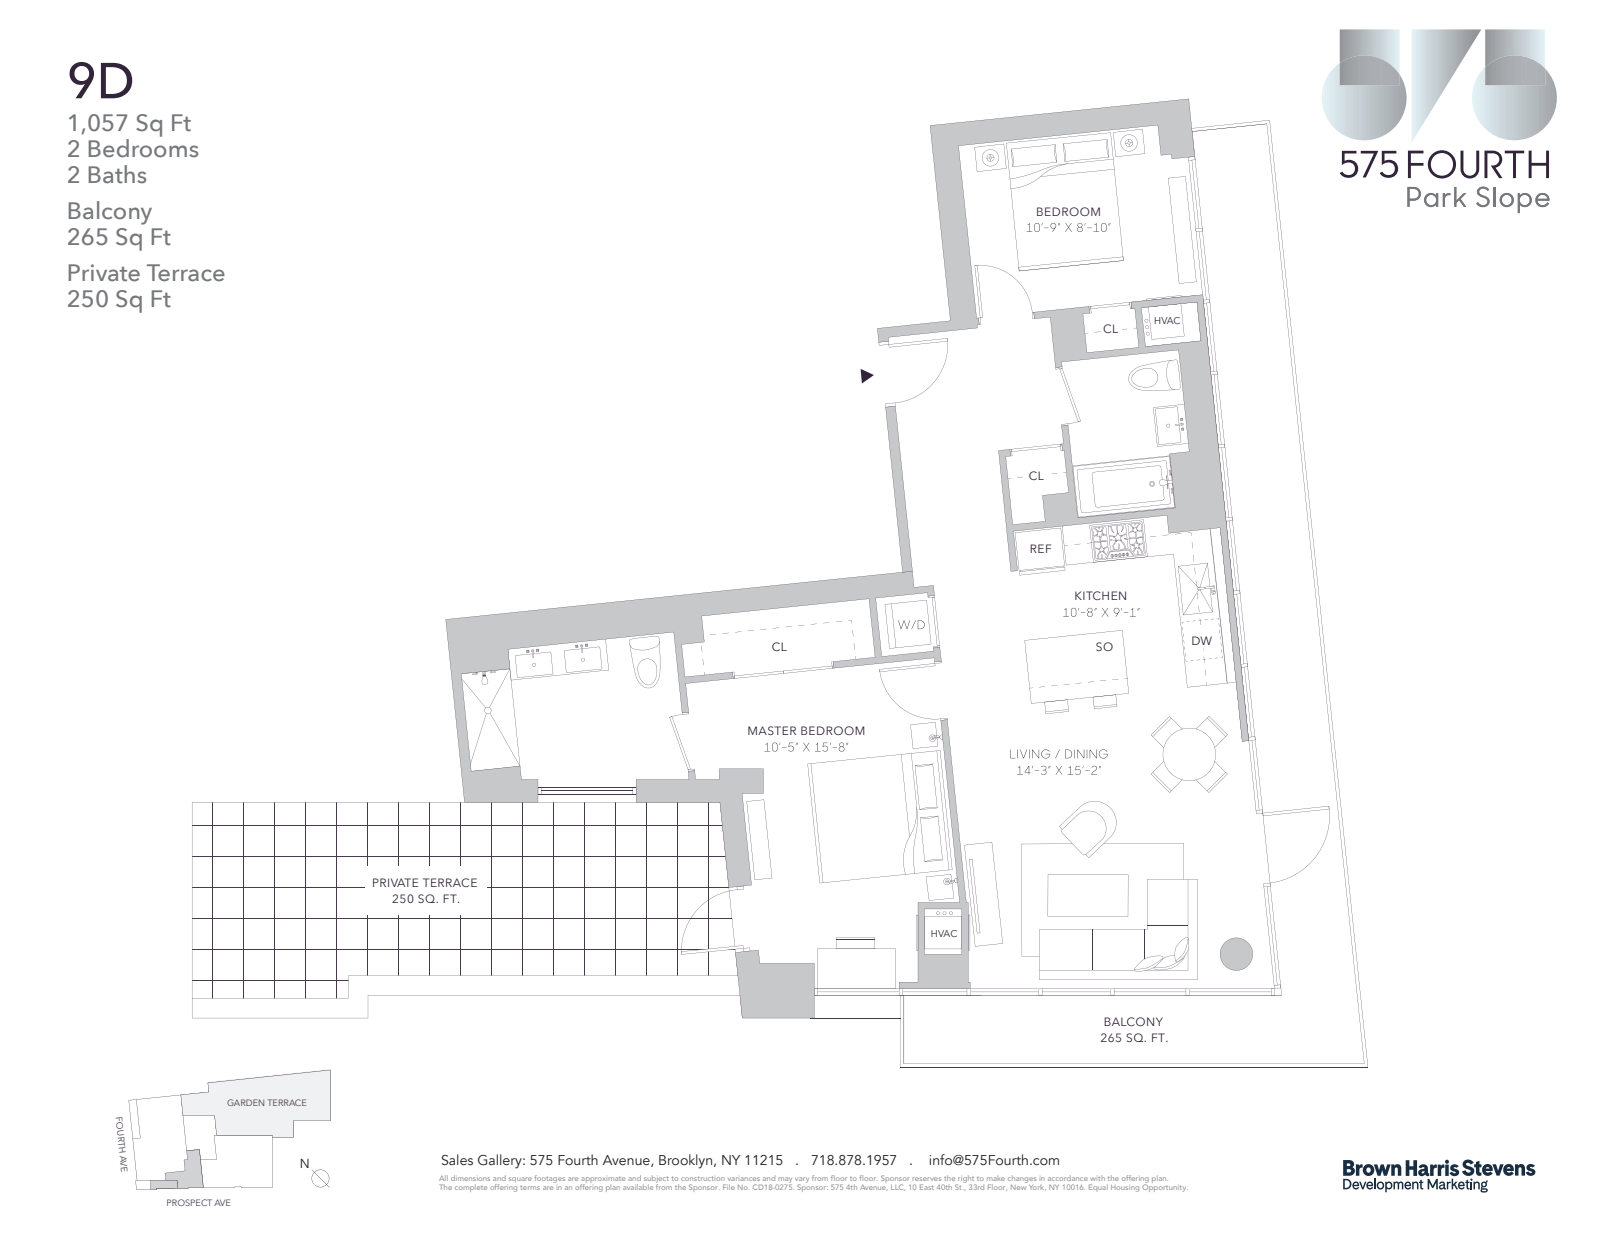 Floorplan for 575 Fourth Avenue, 9D